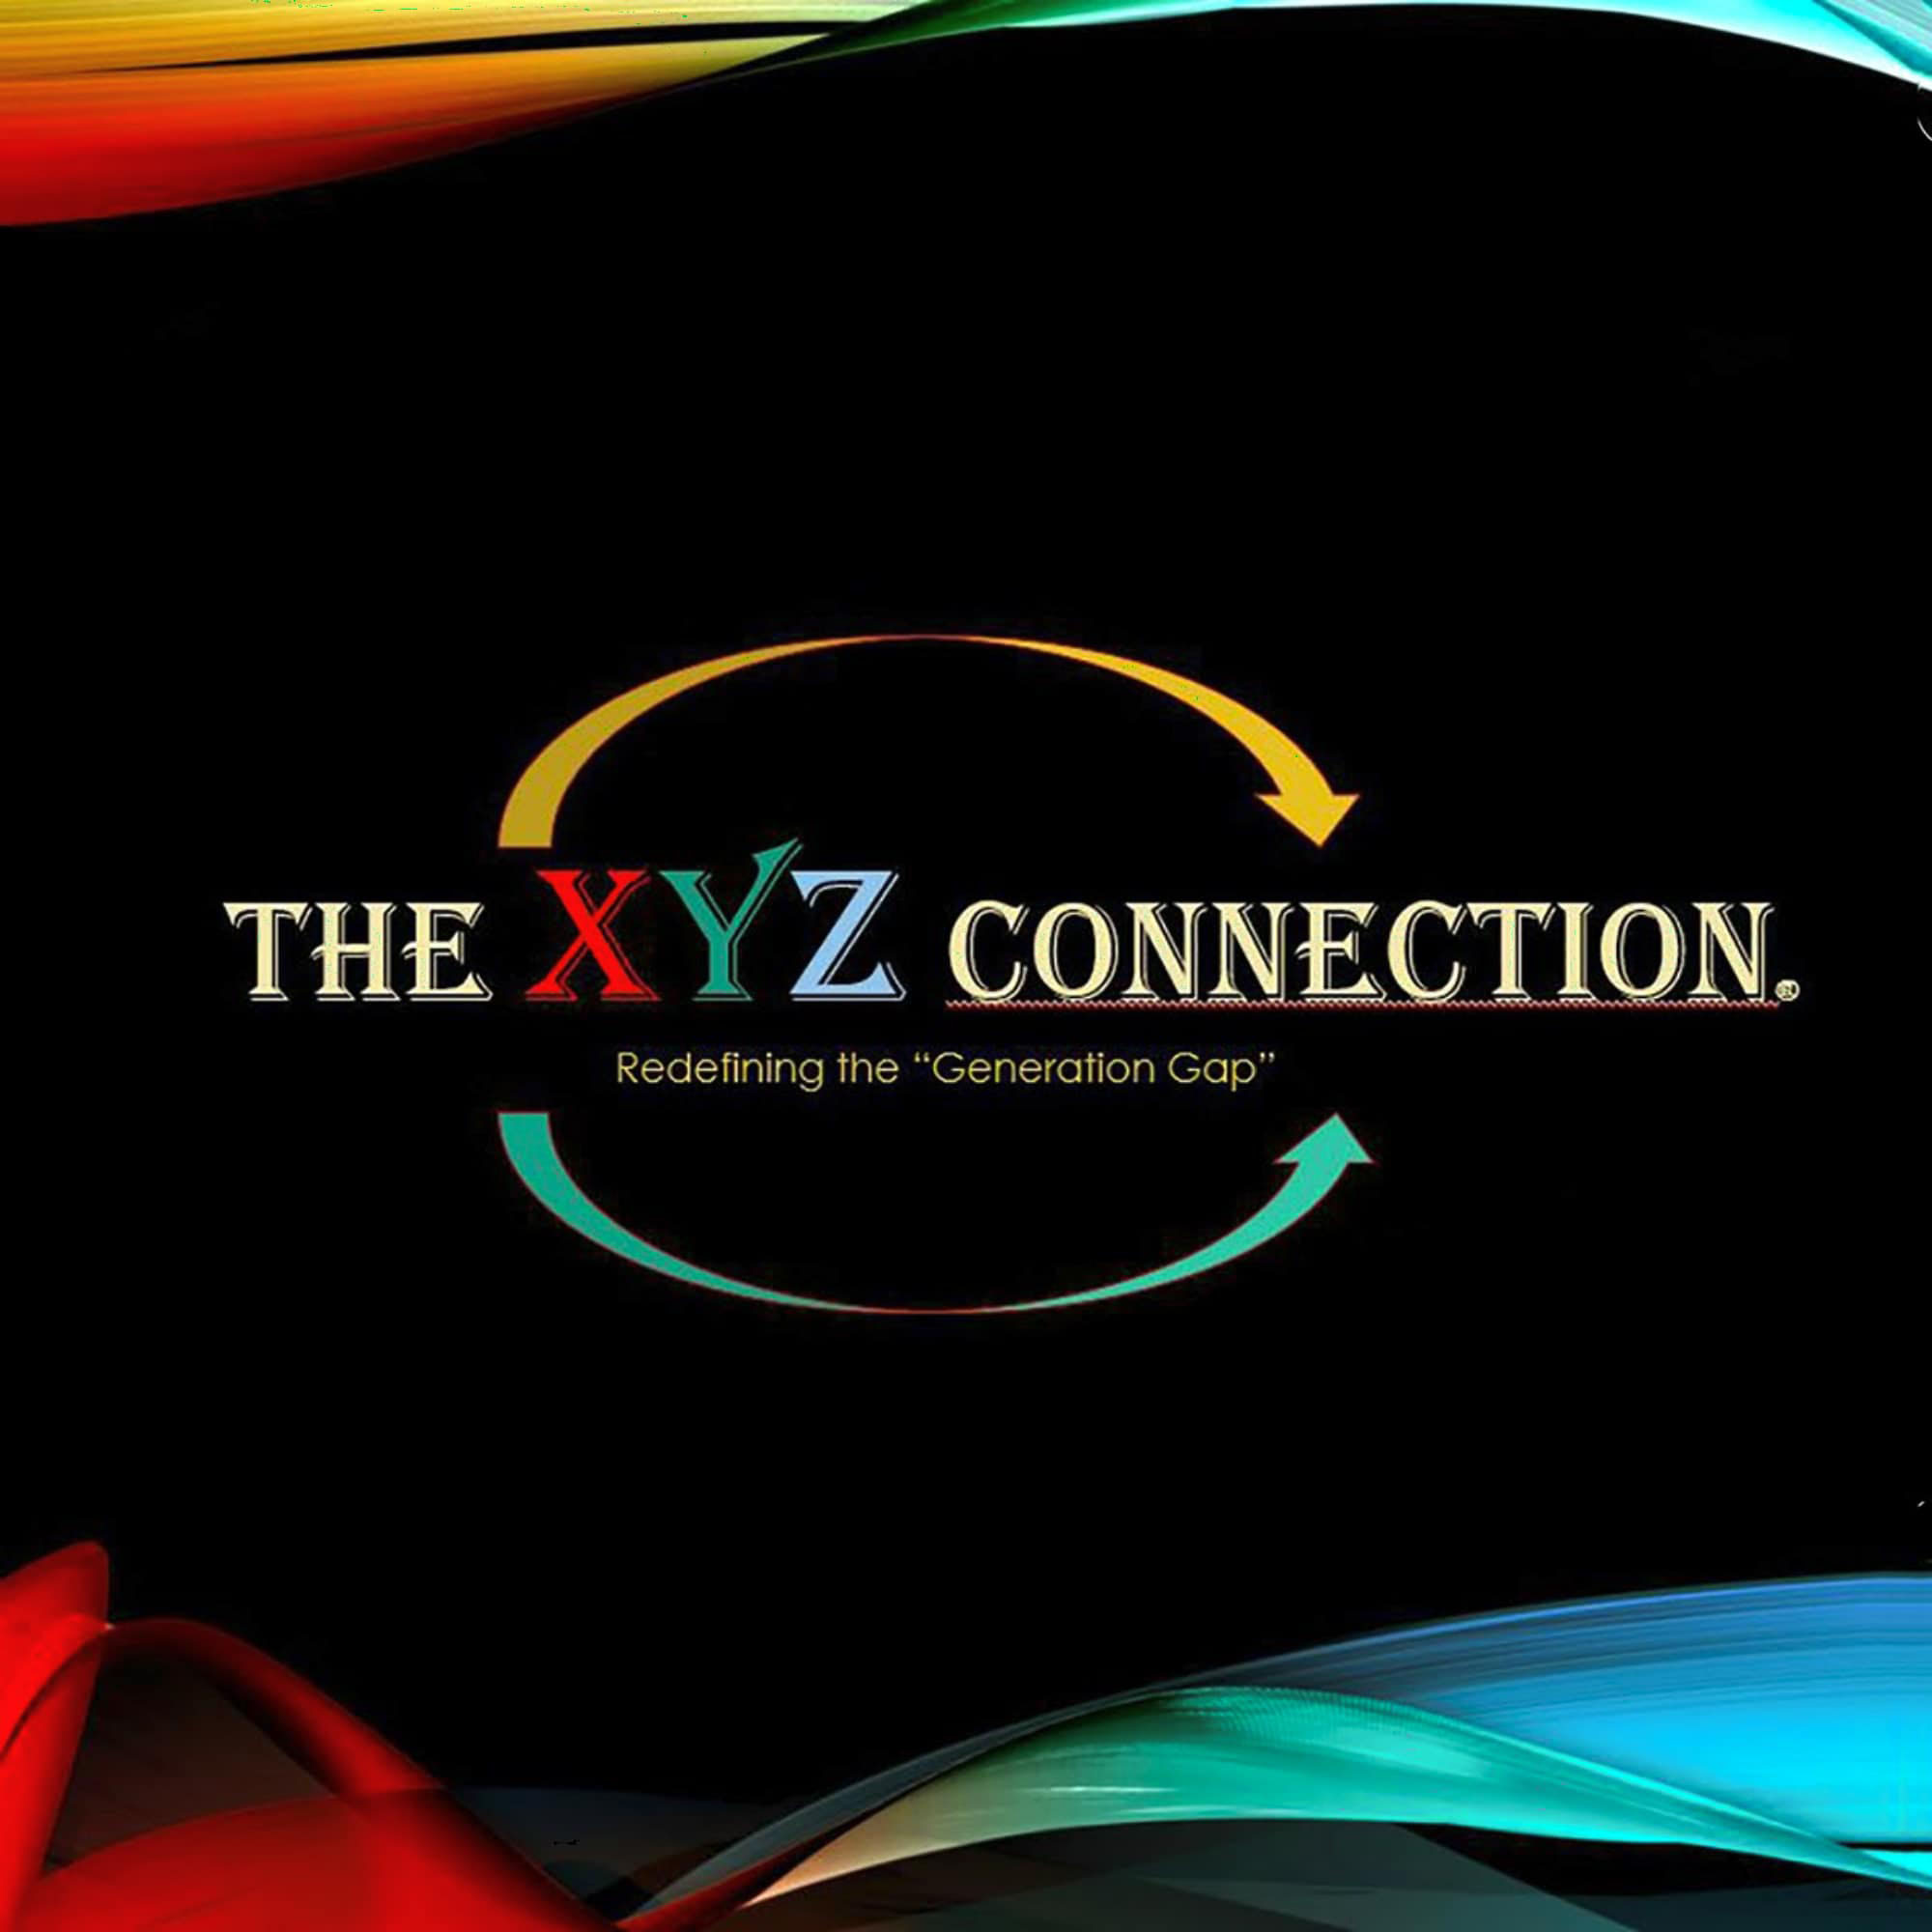 The XYZ Connection with Myckelle